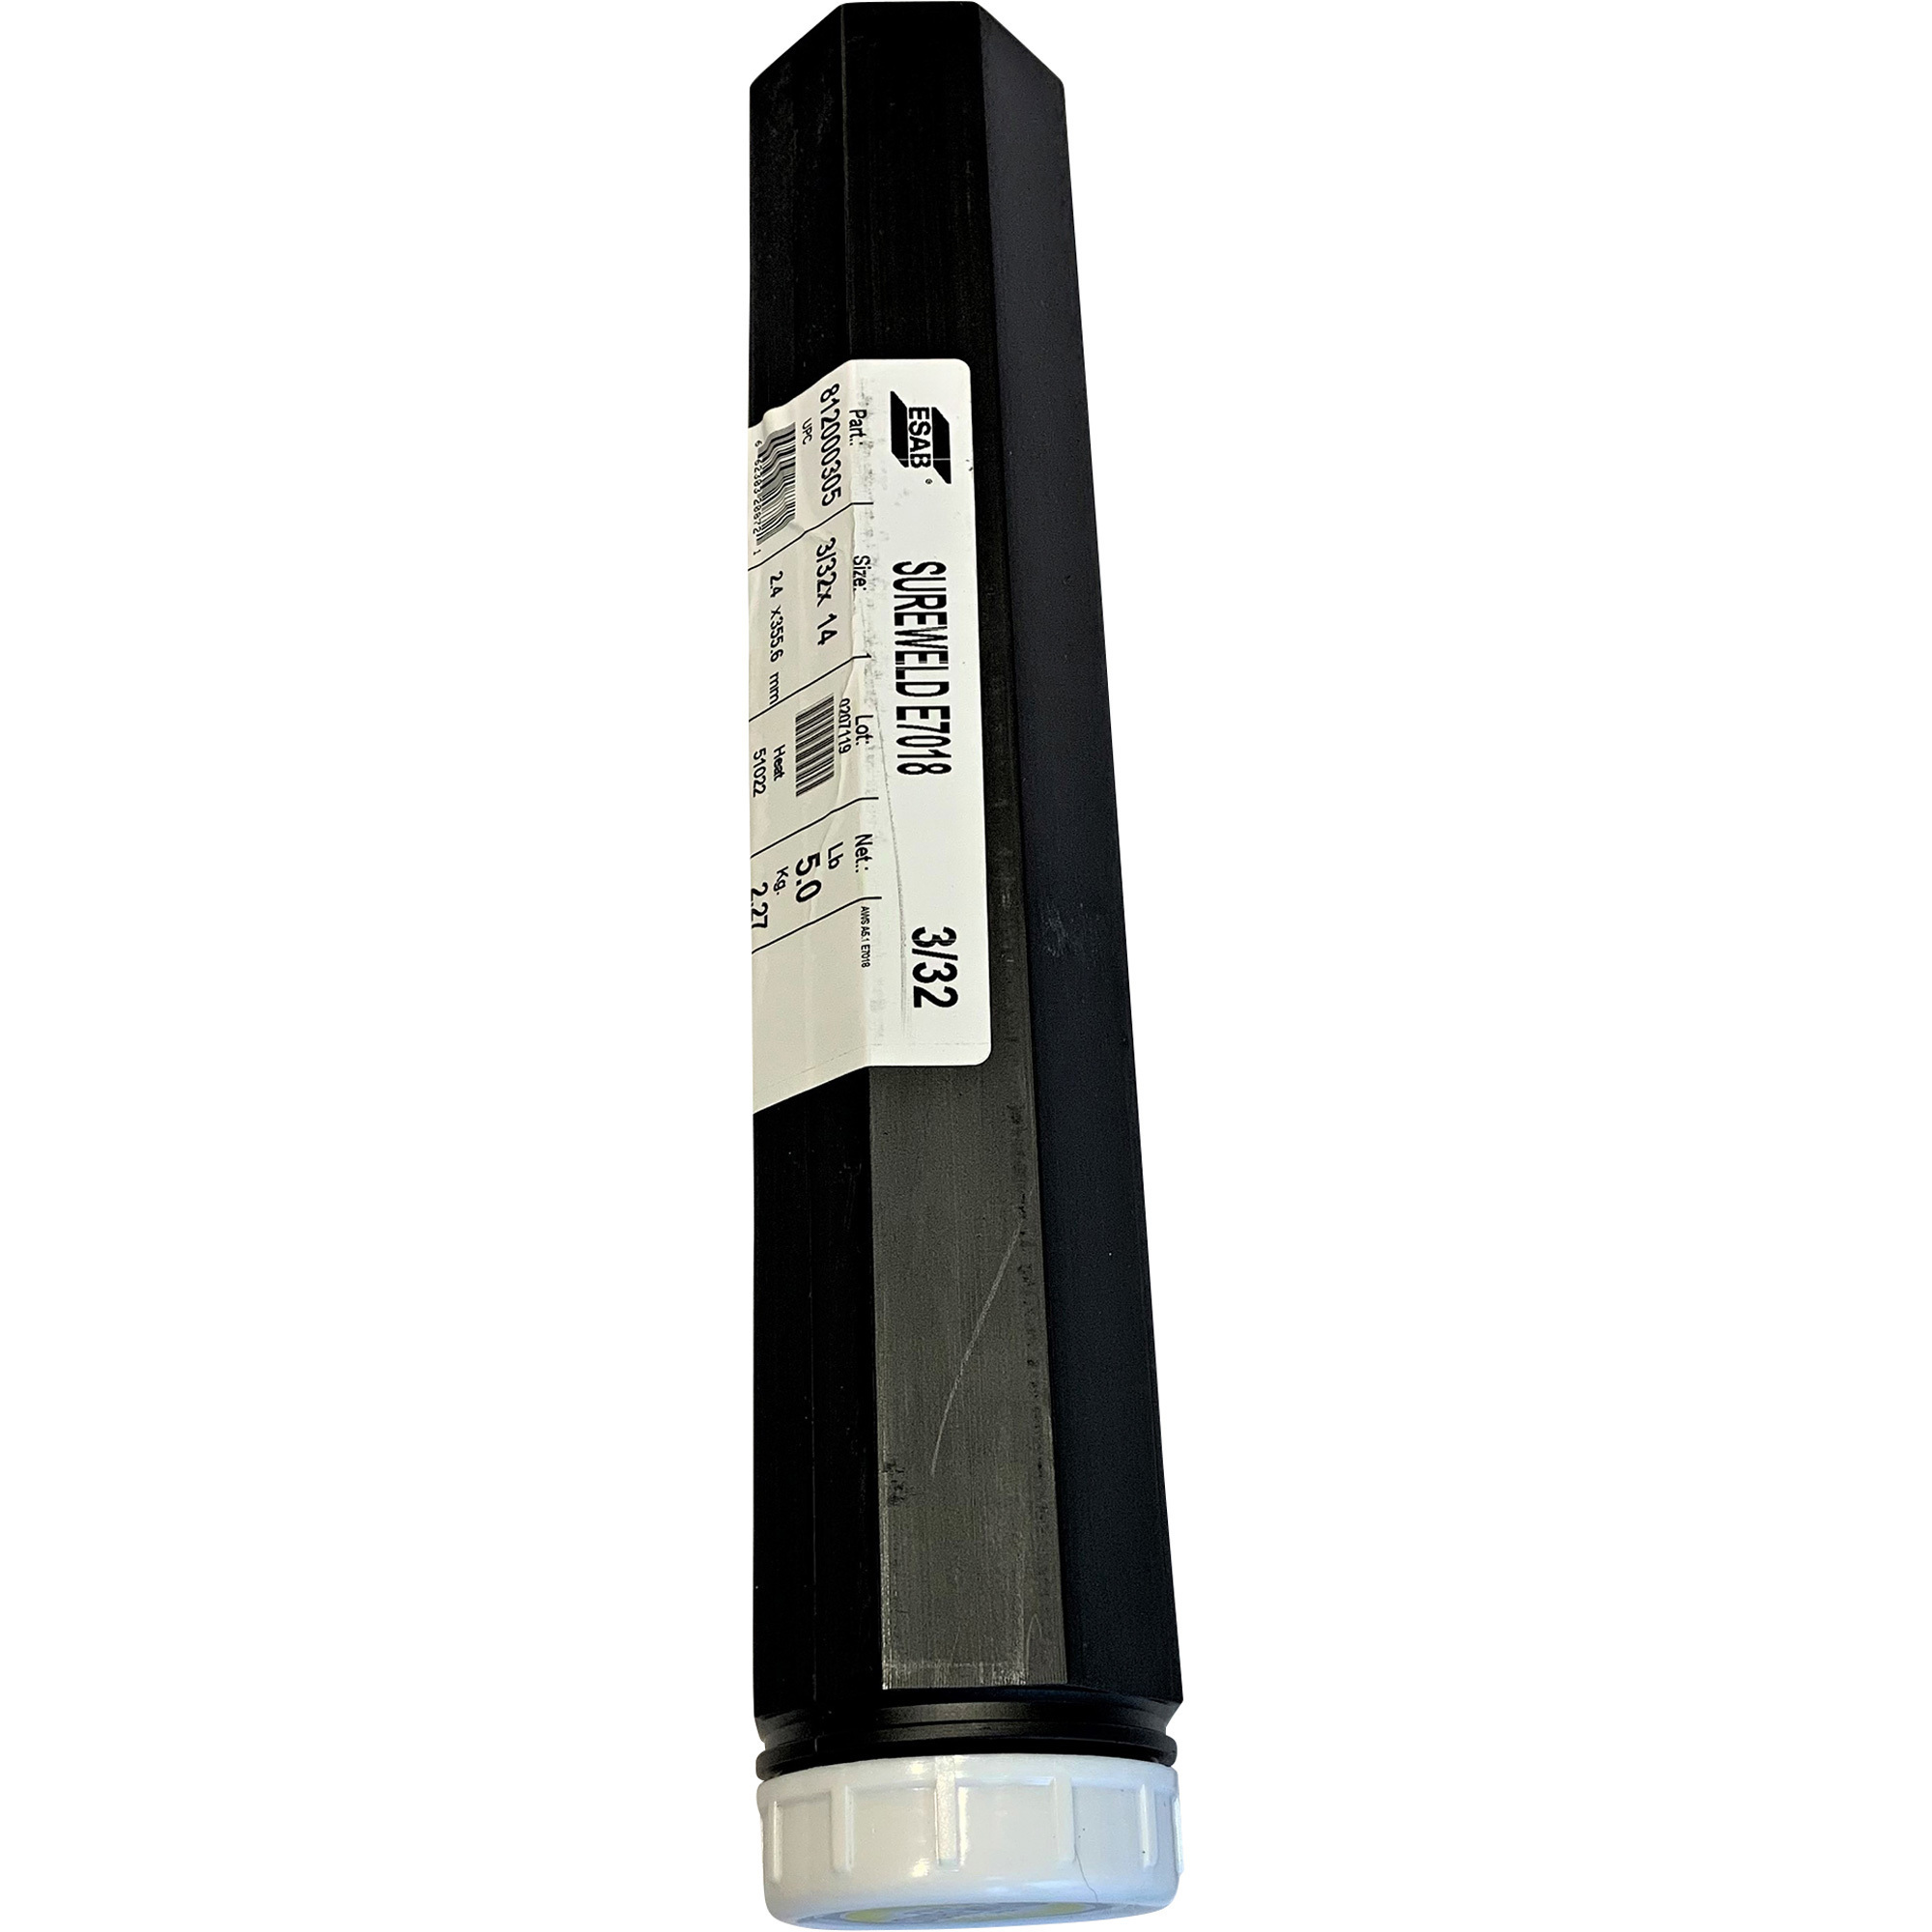 ESAB Sureweld 7018 Stick Electrodes â 3/32Inch Diameter x 14Inch L, 5-Lb. Tube, Model 812000301